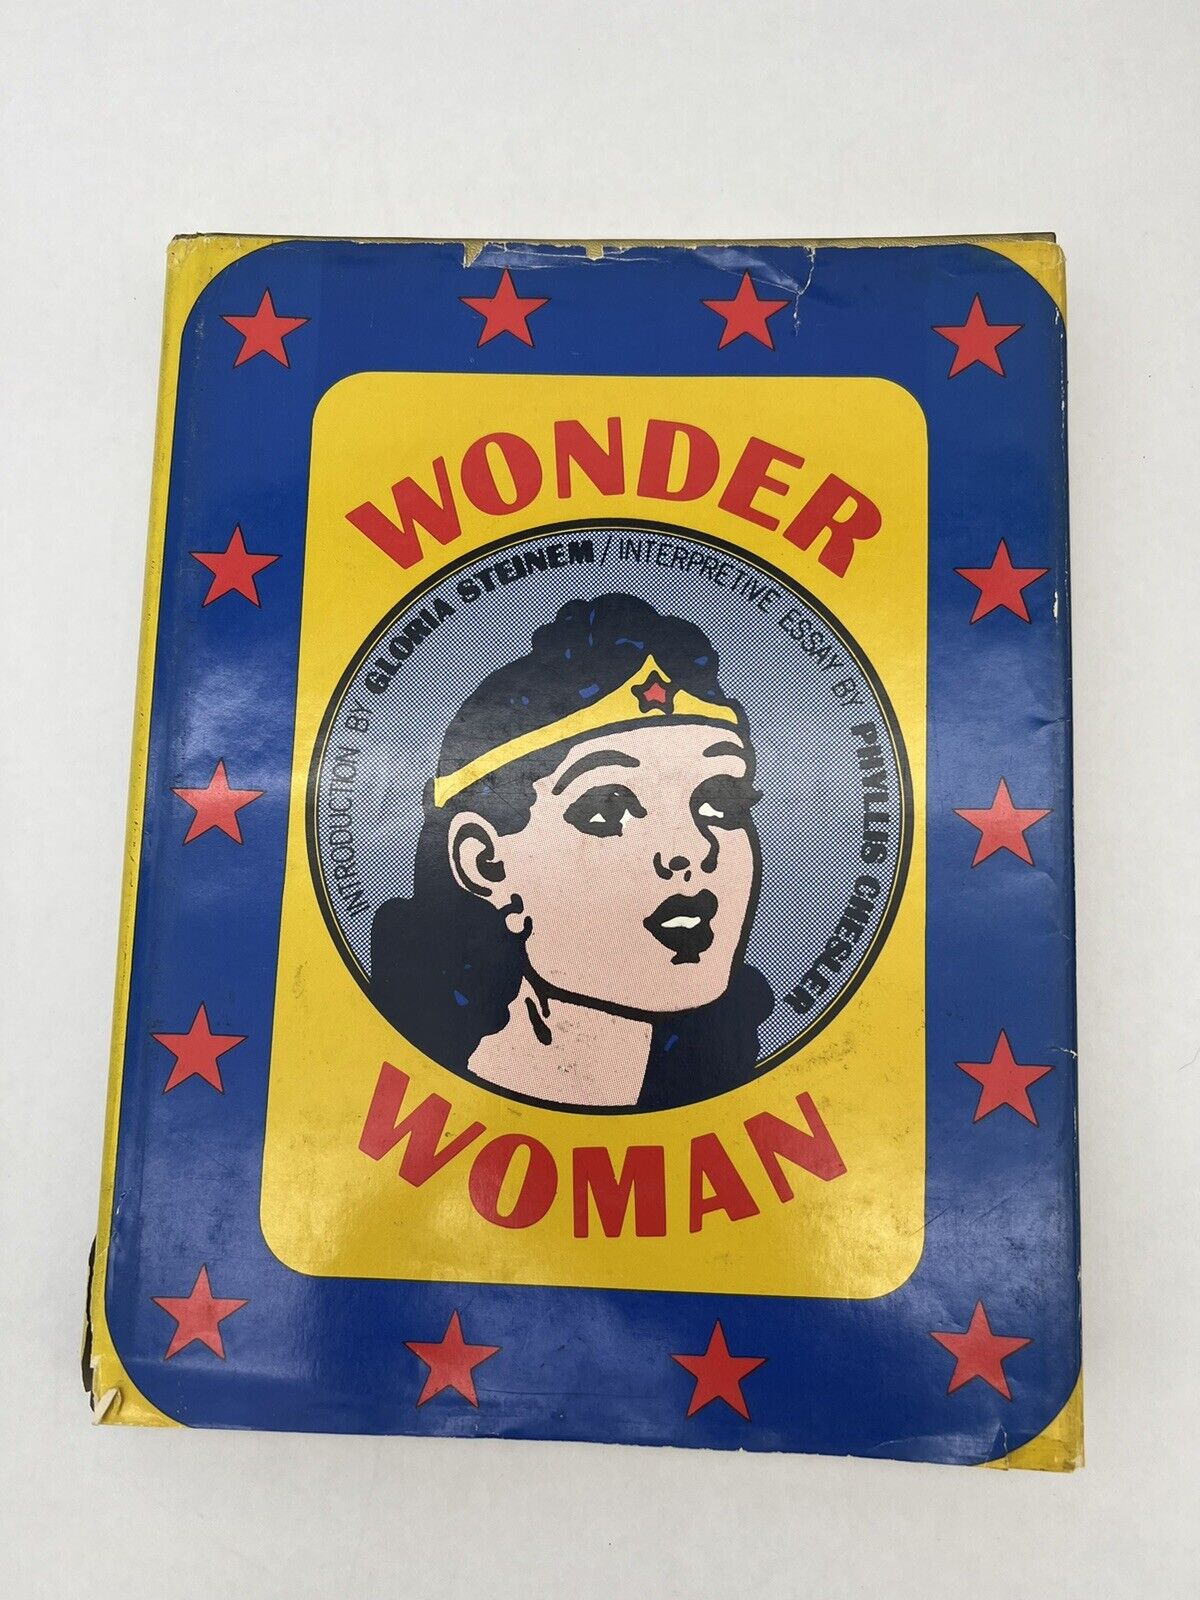 Vintage Bonanza Wonder Woman 1st Ed. 1972 Hardcover Book Steinem Phyllis Chesler